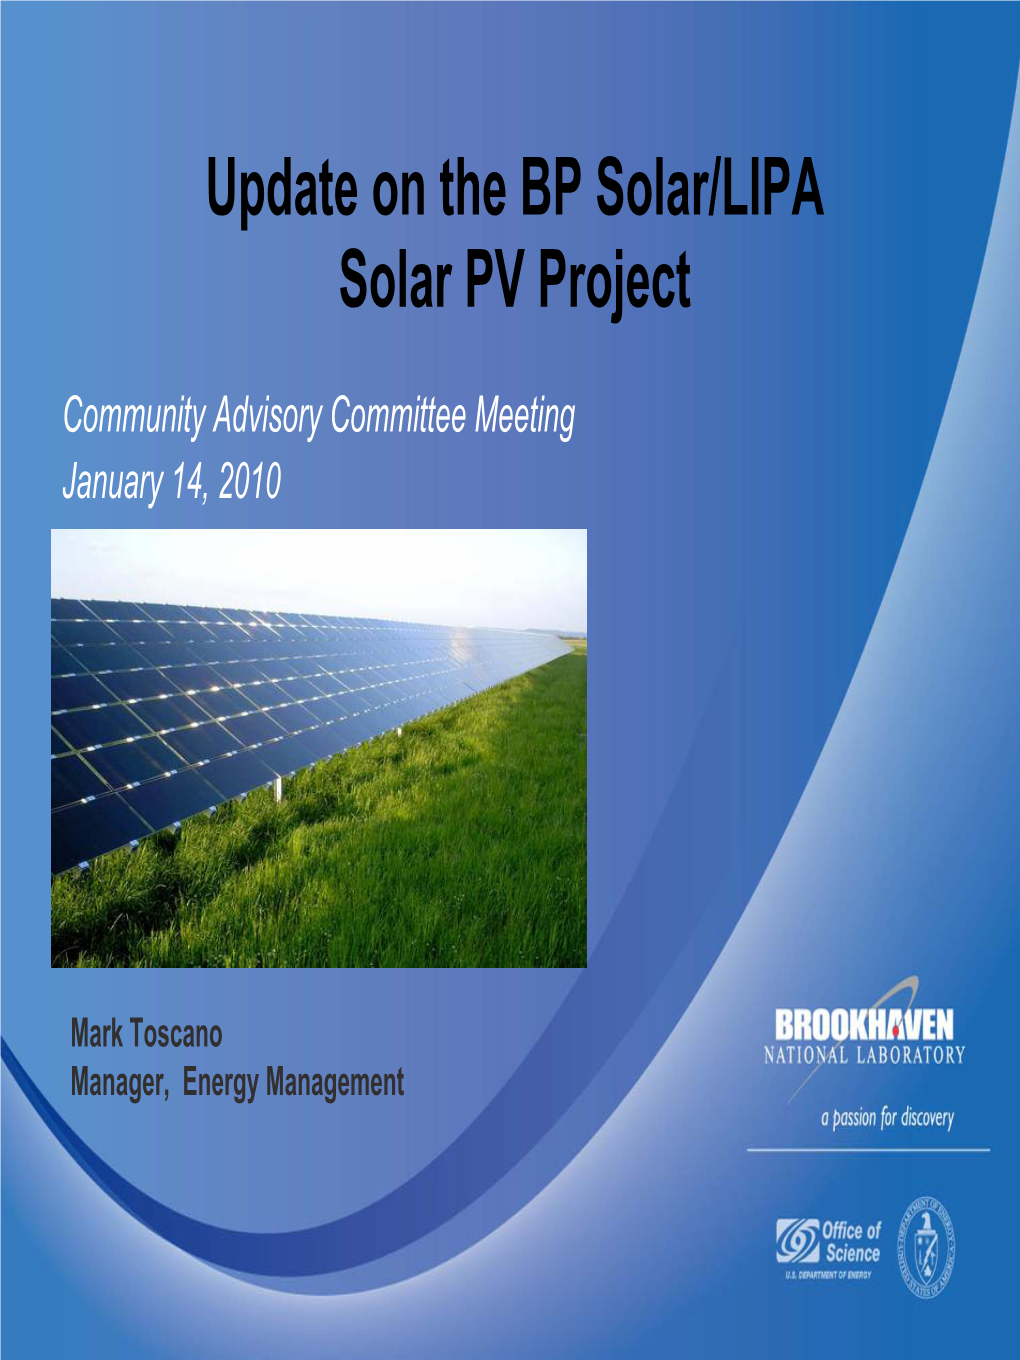 Update on the BP Solar/LIPA Solar PV Project